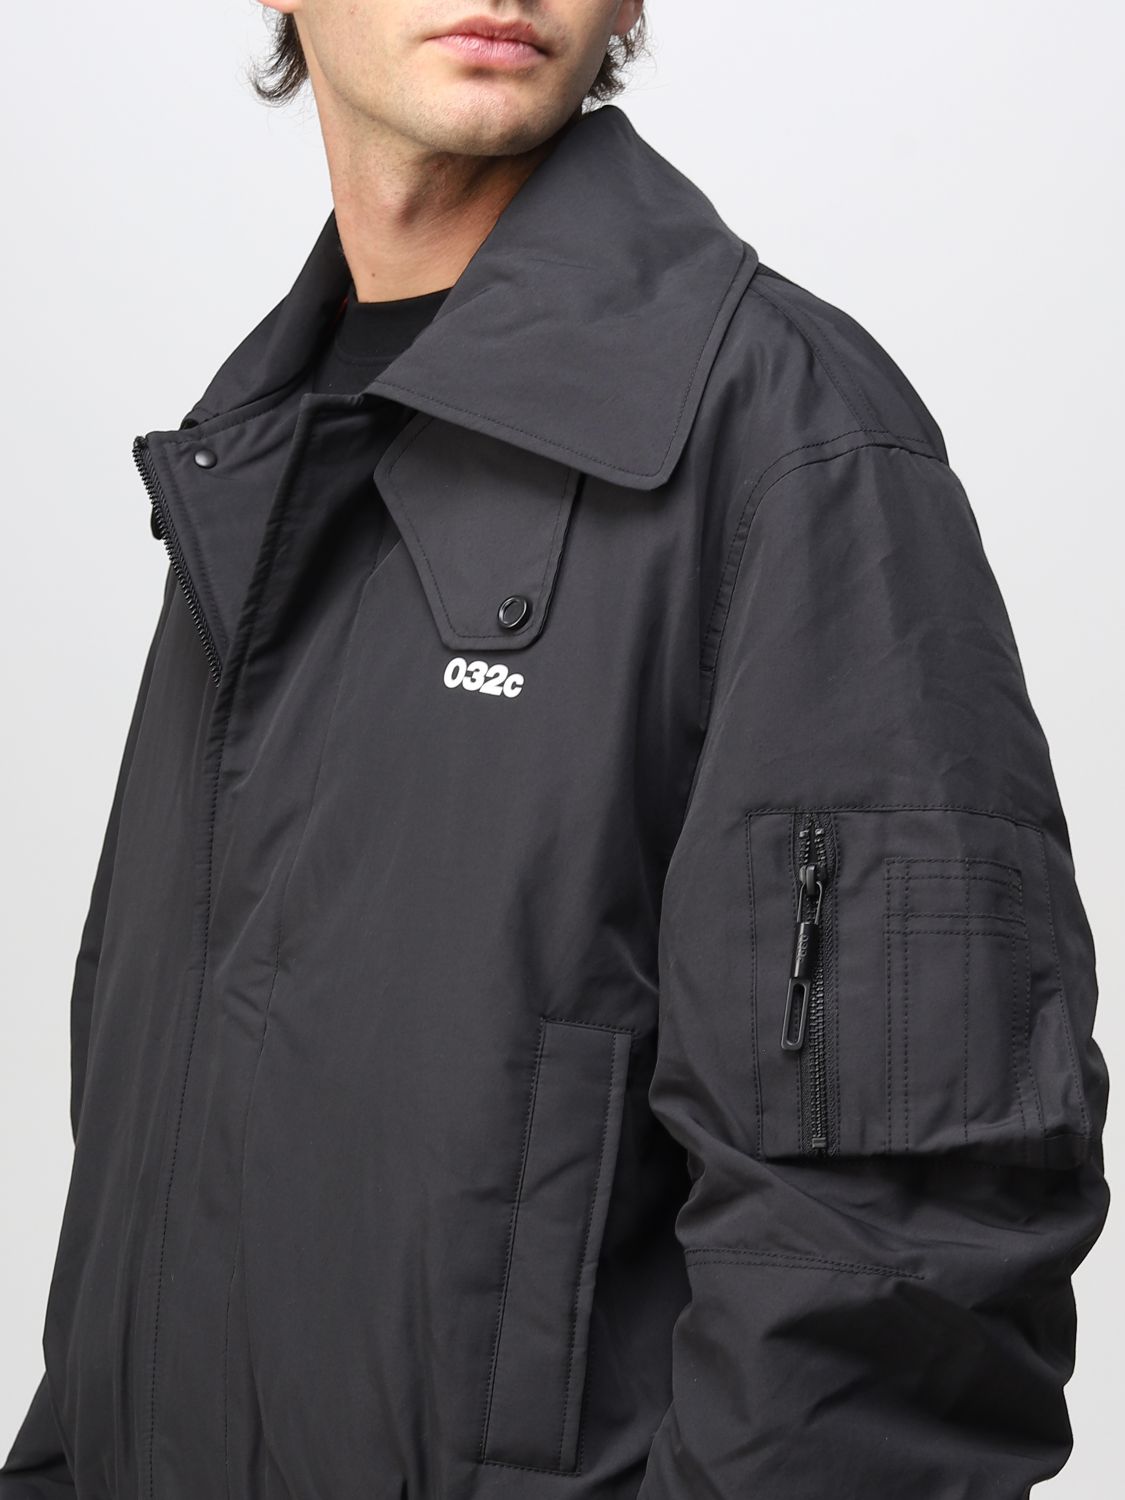 032C: jacket for men - Black | 032C jacket FW22W4010 online on GIGLIO.COM